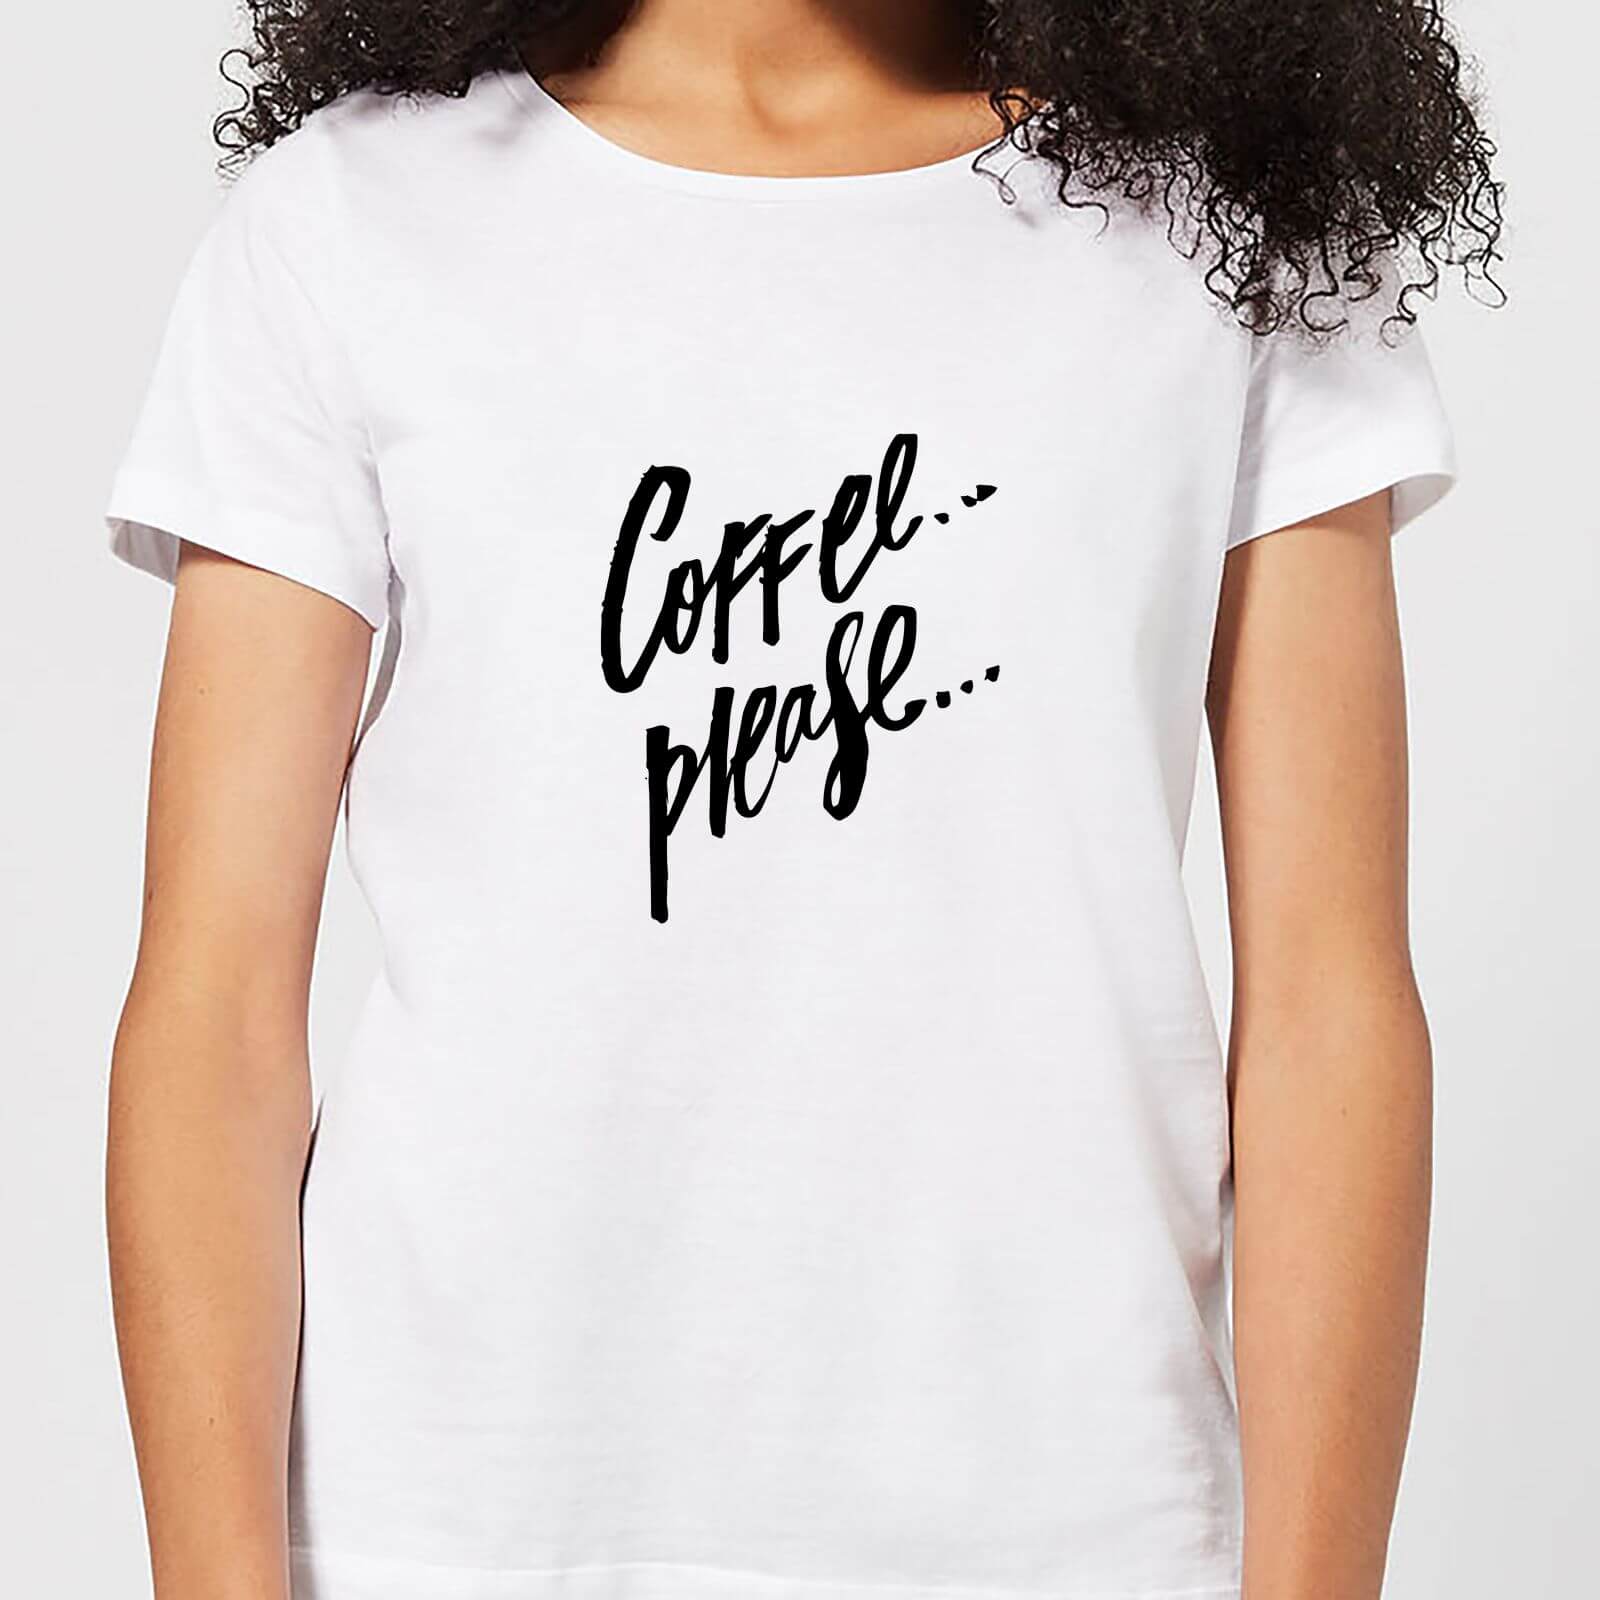 Coffee Please... Women's T-Shirt - White - S - White